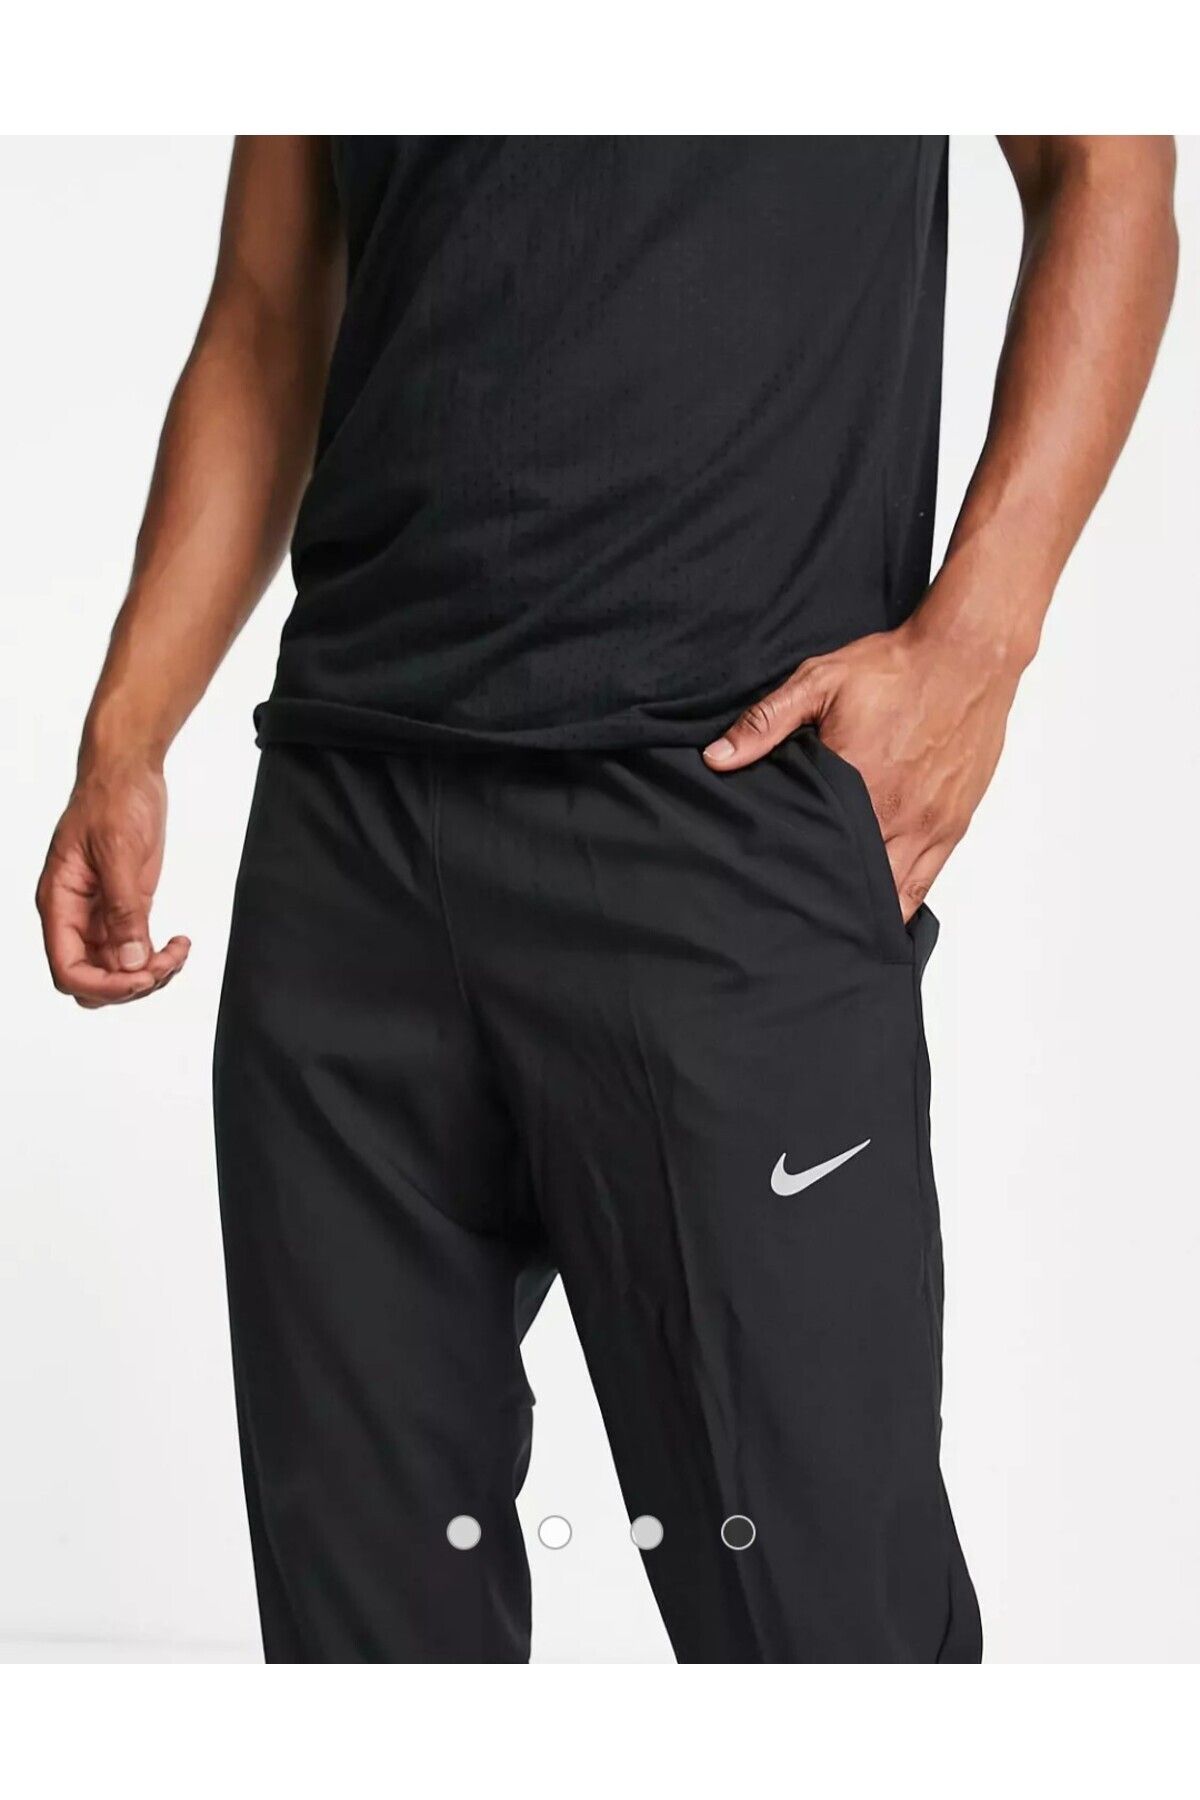 Nike Erkek Siyah Eşofman Altı